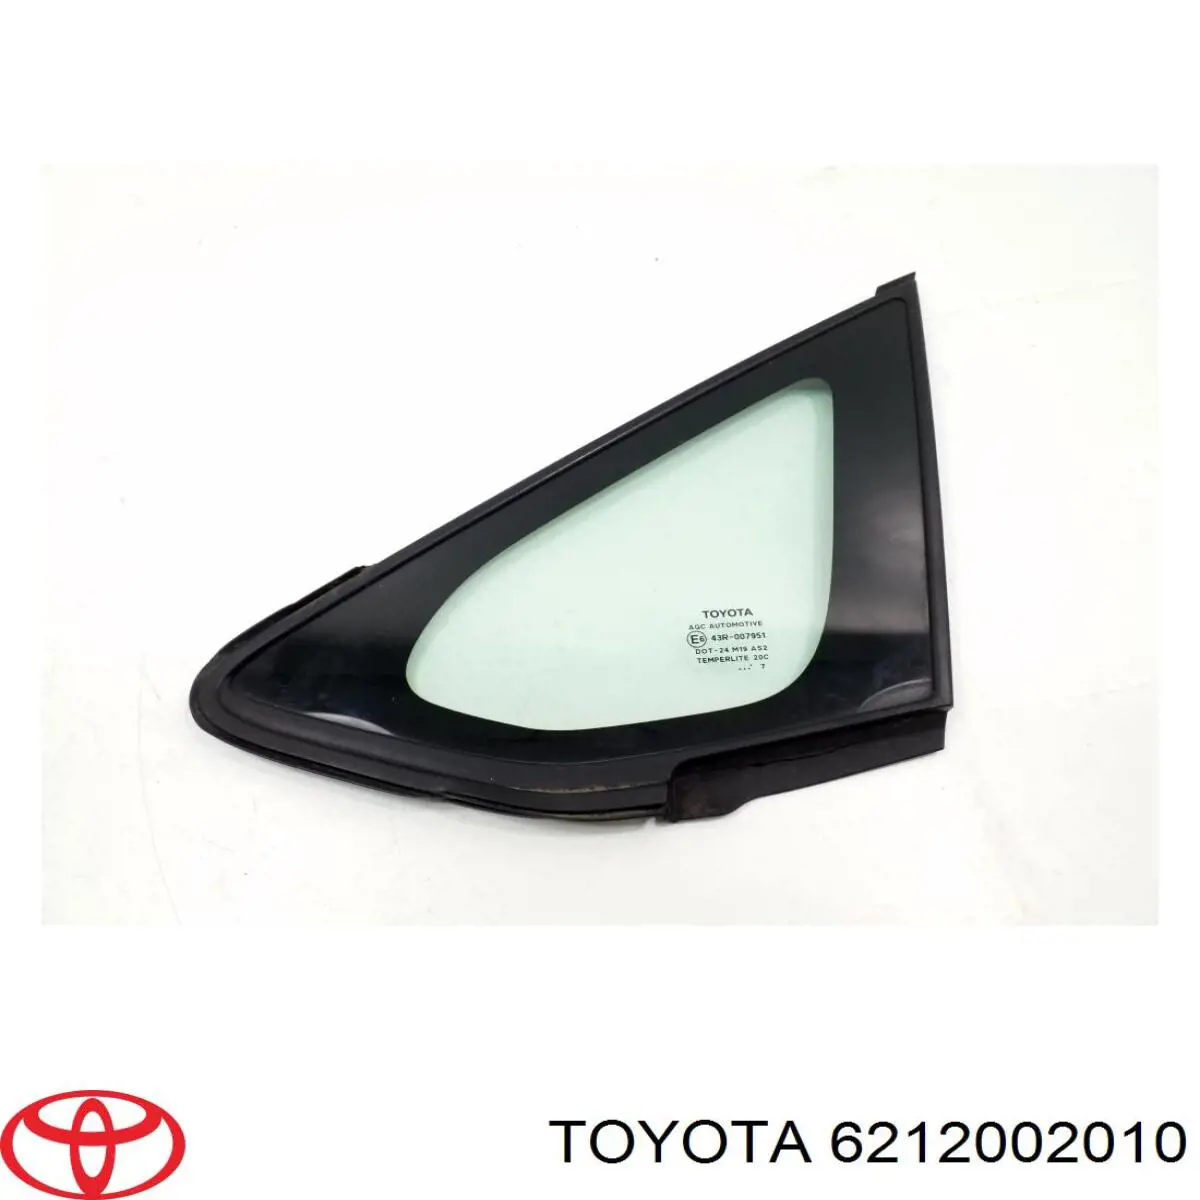 6212002010 Toyota ventana de vidrio puerta delantera izquierda